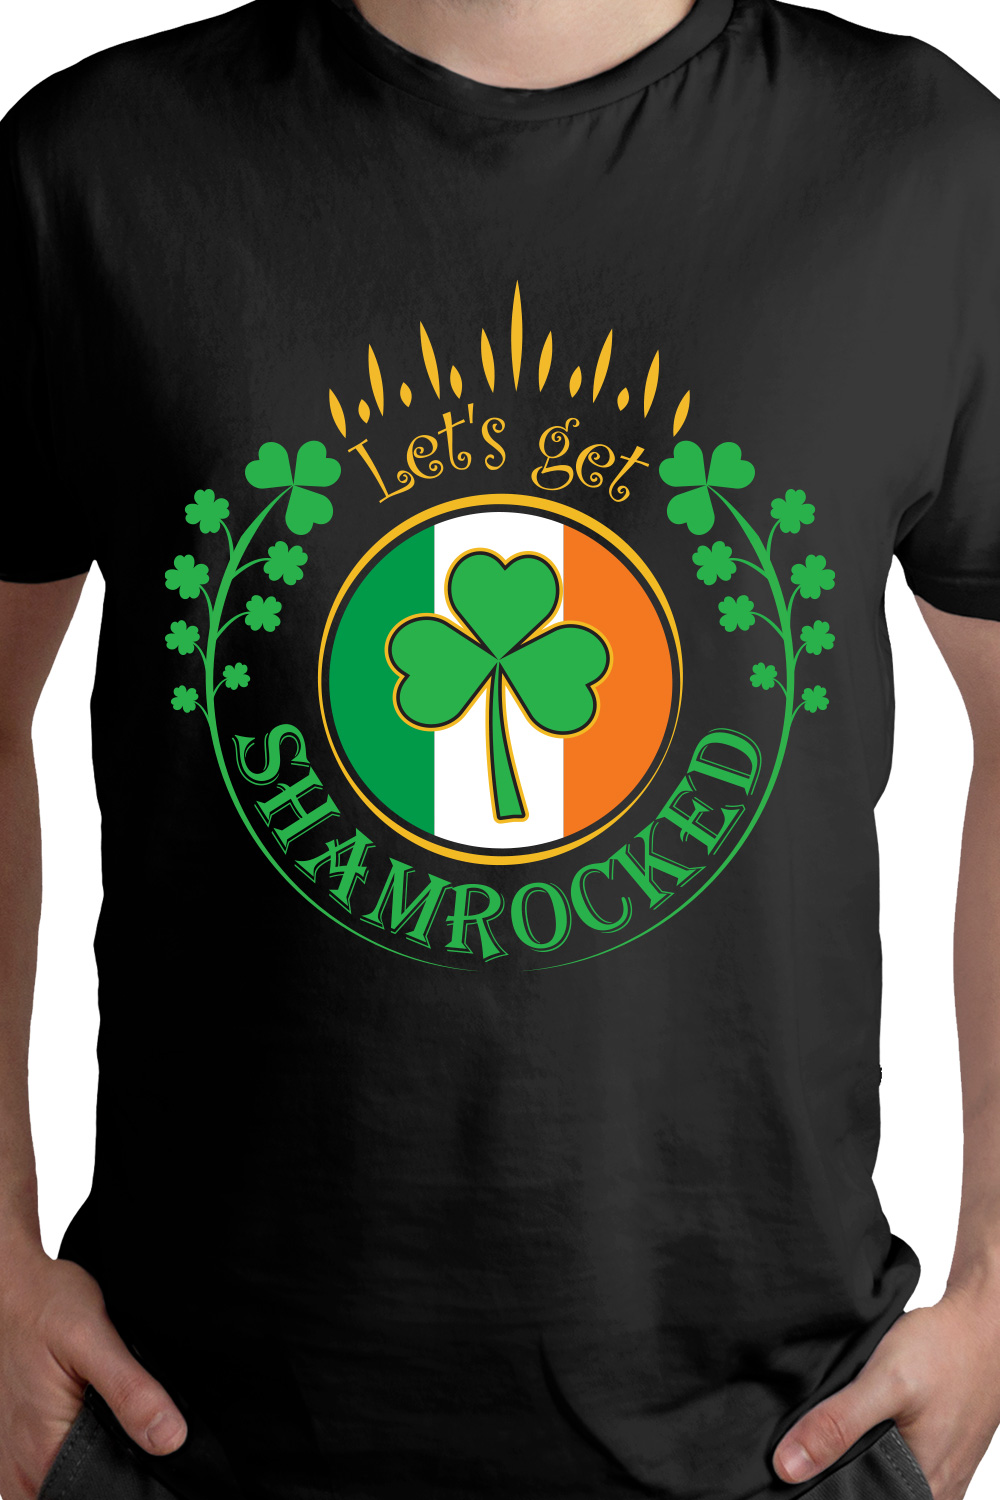 Let’s get shamrocked St Patrick's day t-shirt design pinterest preview image.